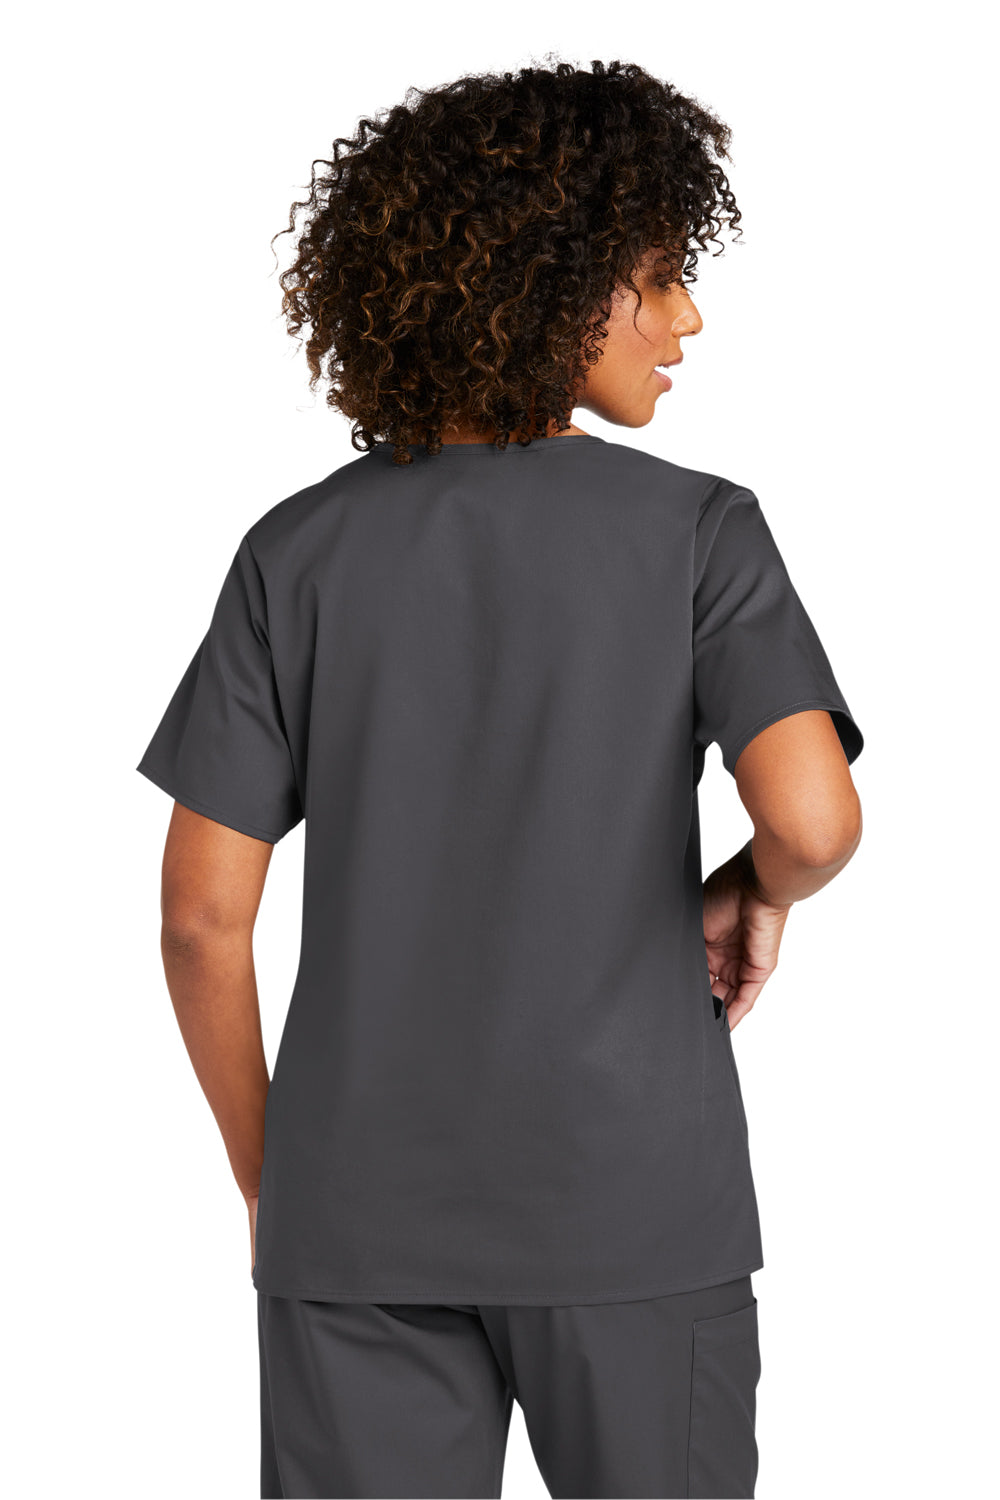 Wonderwink WW4760 WorkFlex Short Sleeve V-Neck Mock Wrap Shirt Pewter Grey Back